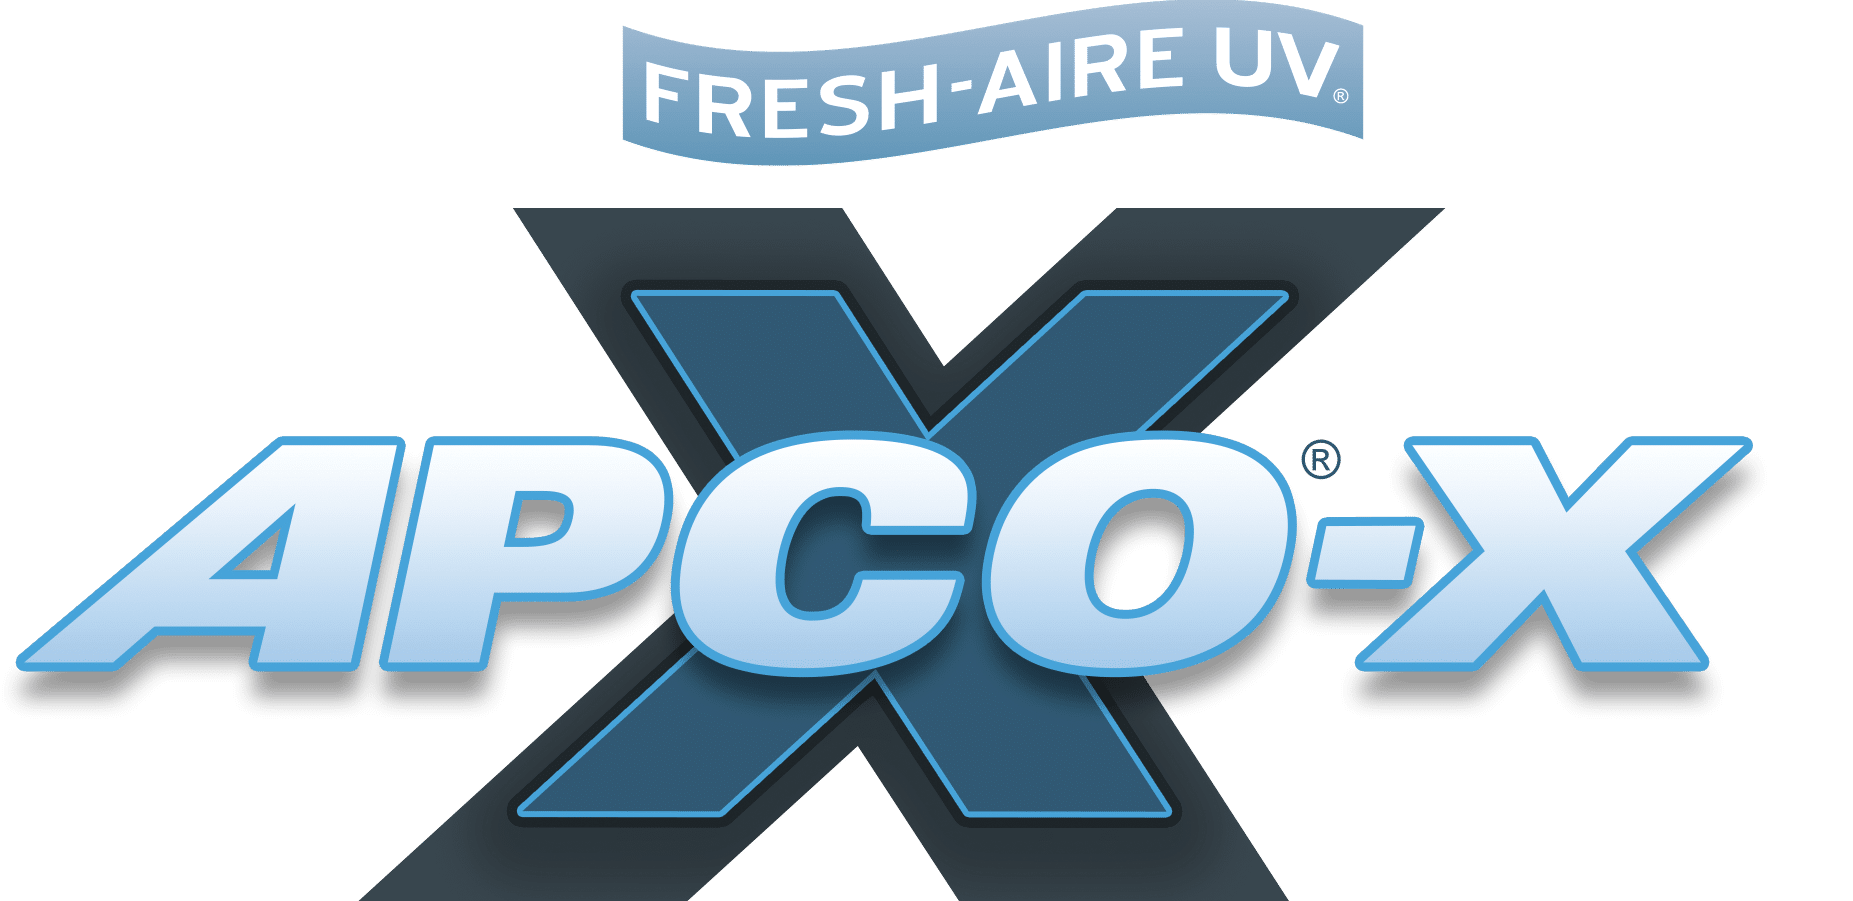 Fresh Aire UV APCO-X Air Treatment System Logo